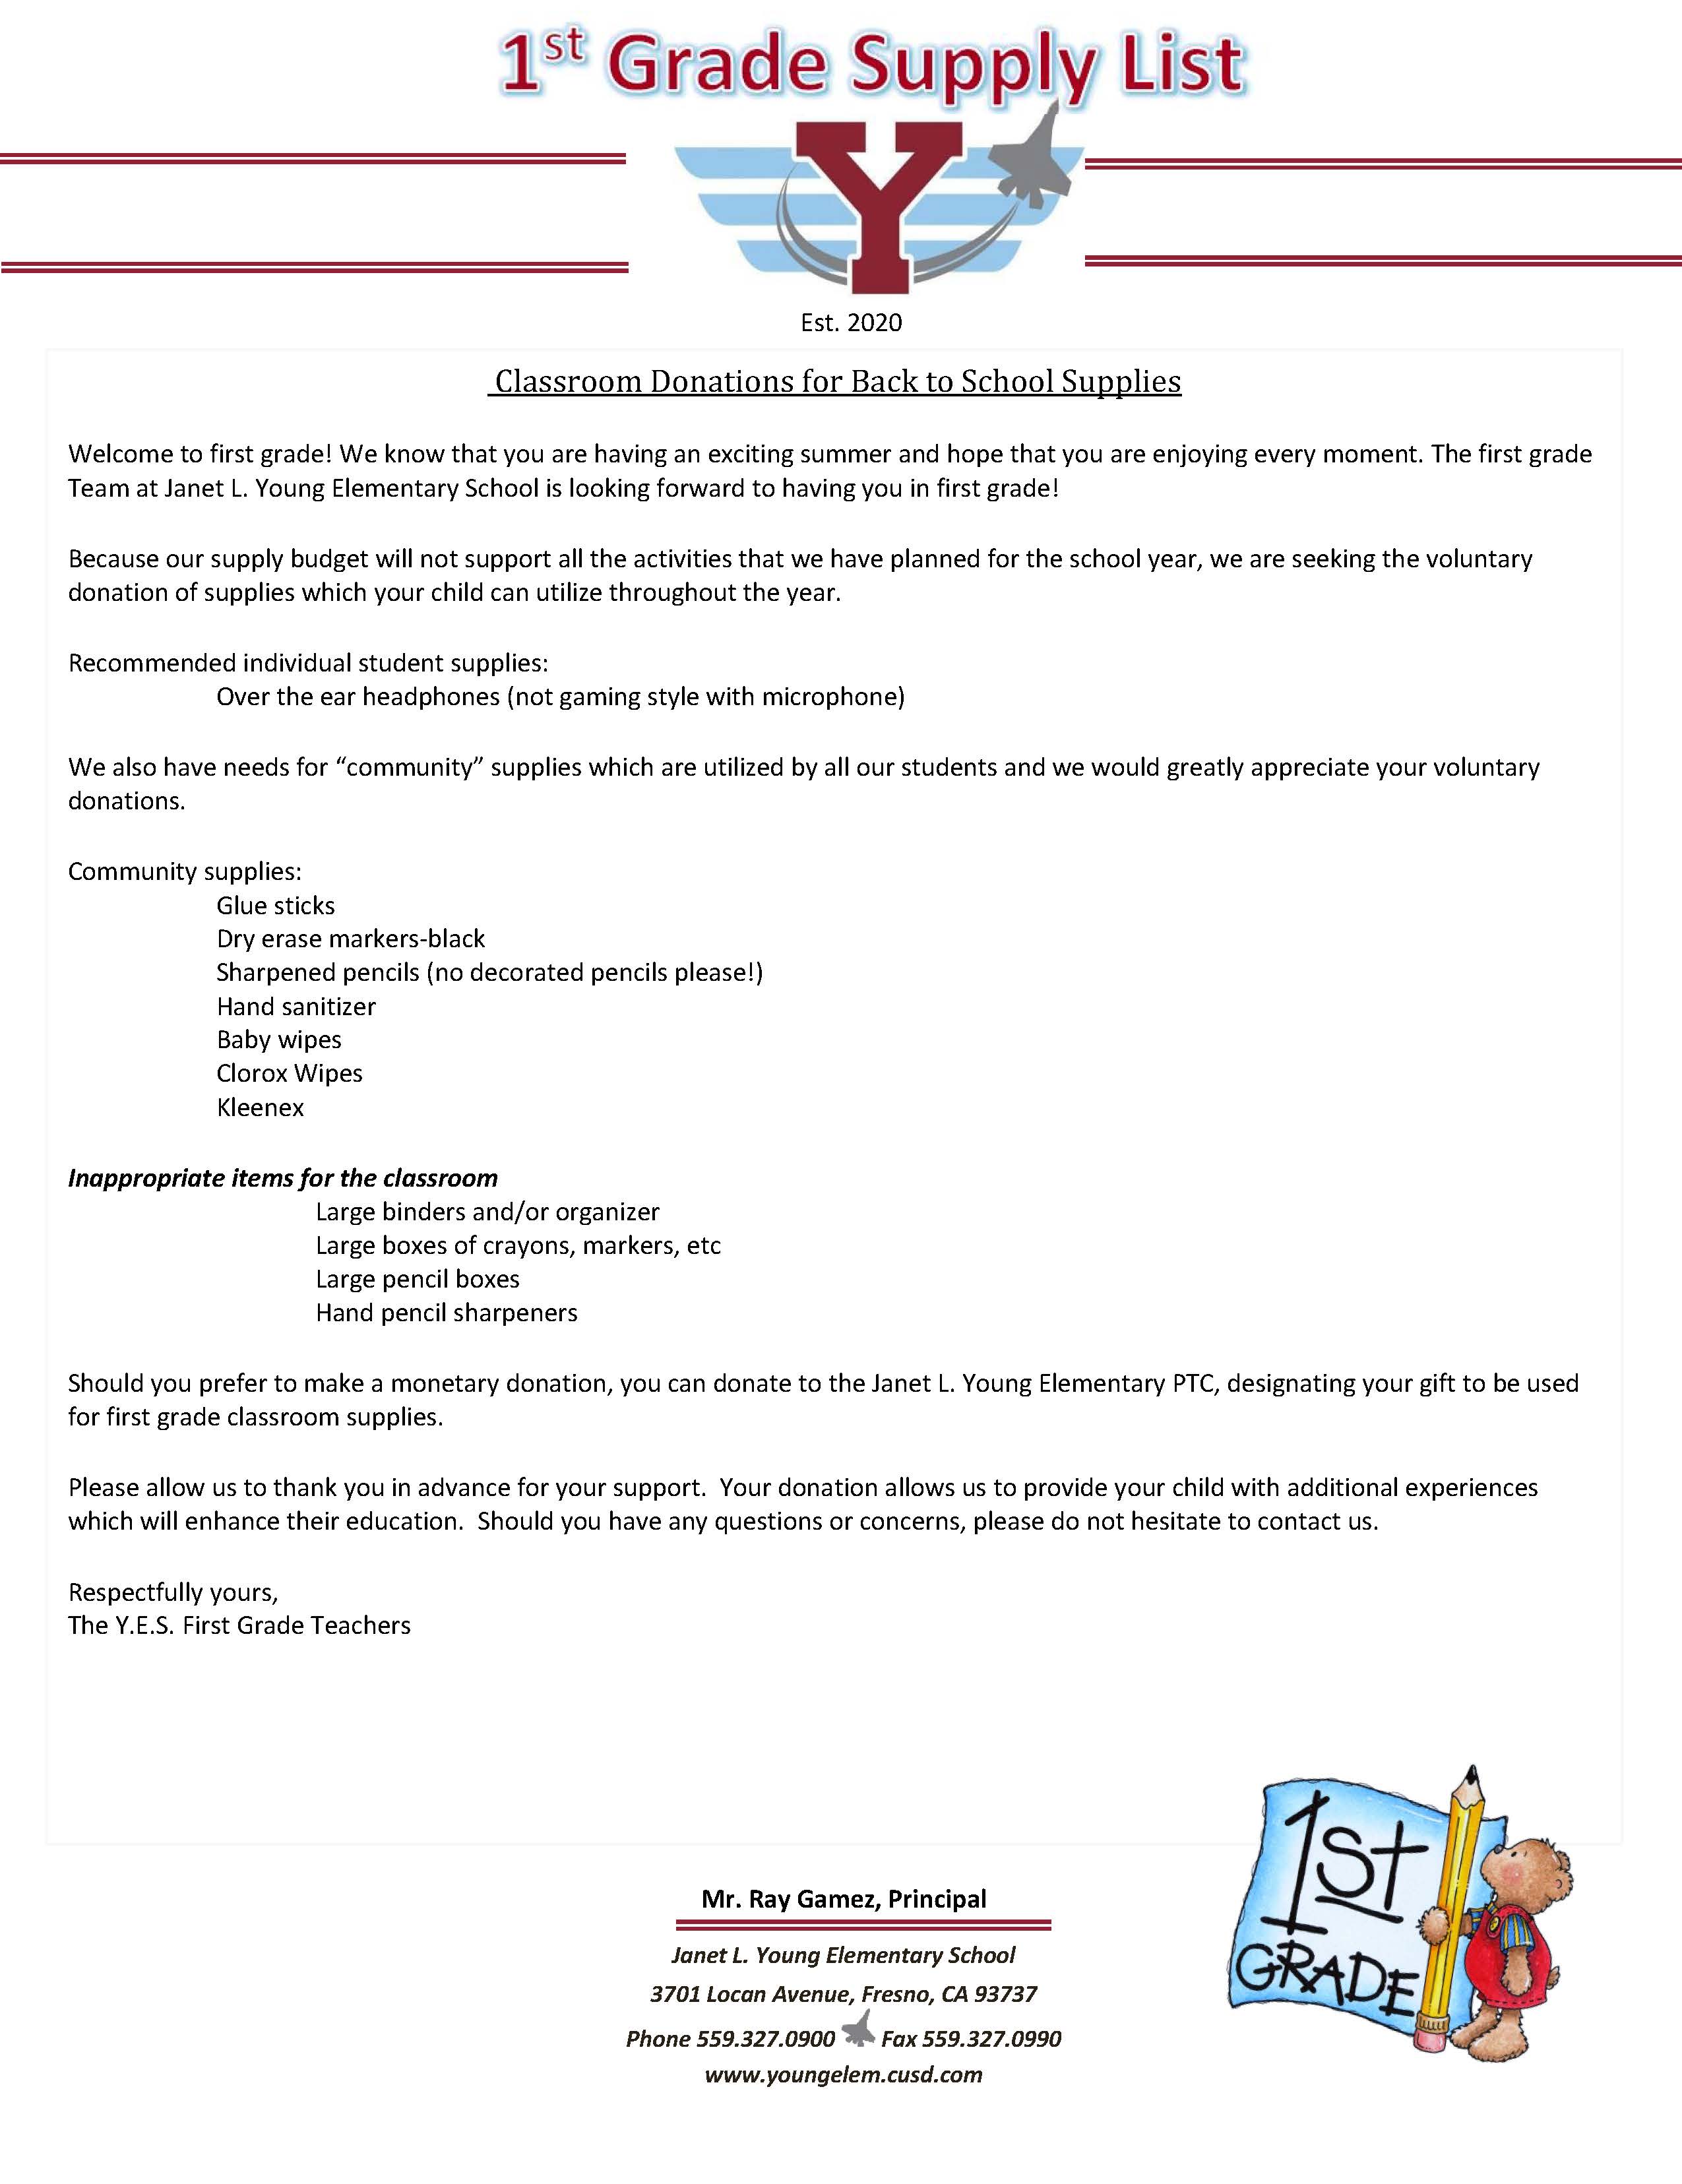 Image for: 1st Grade 23-24 Supply List Final.pdf